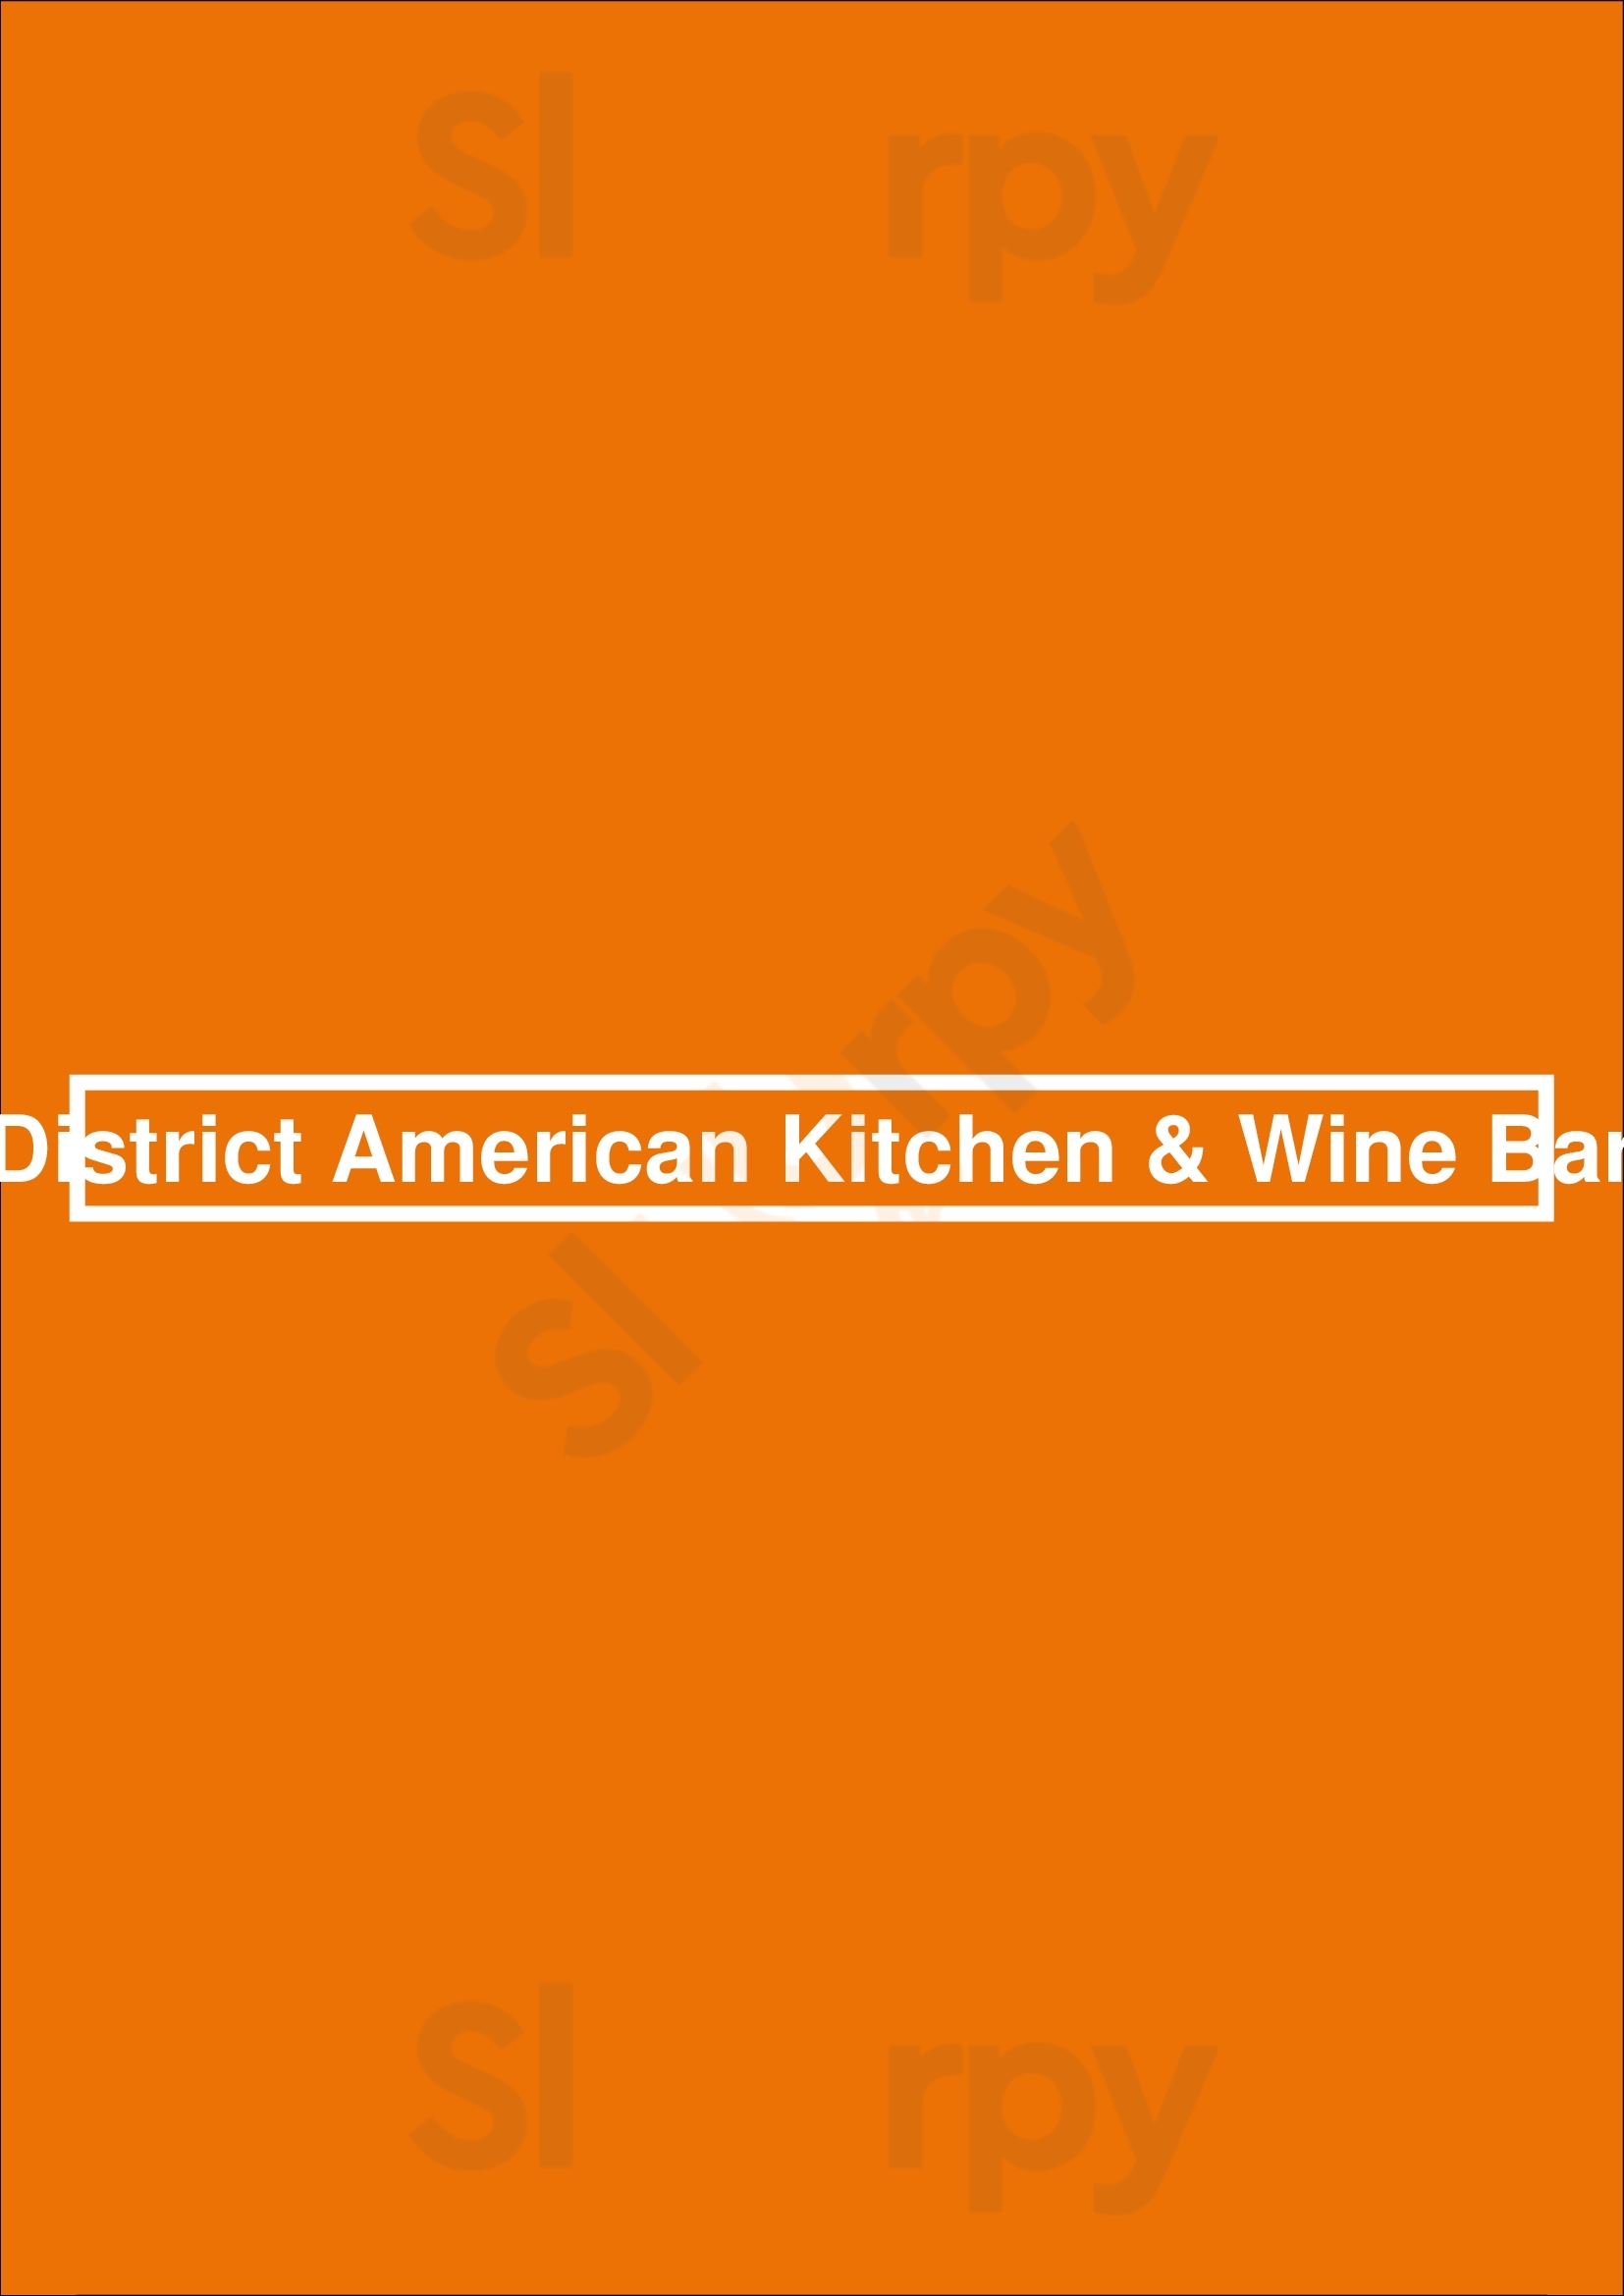 District American Kitchen & Wine Bar Phoenix Menu - 1